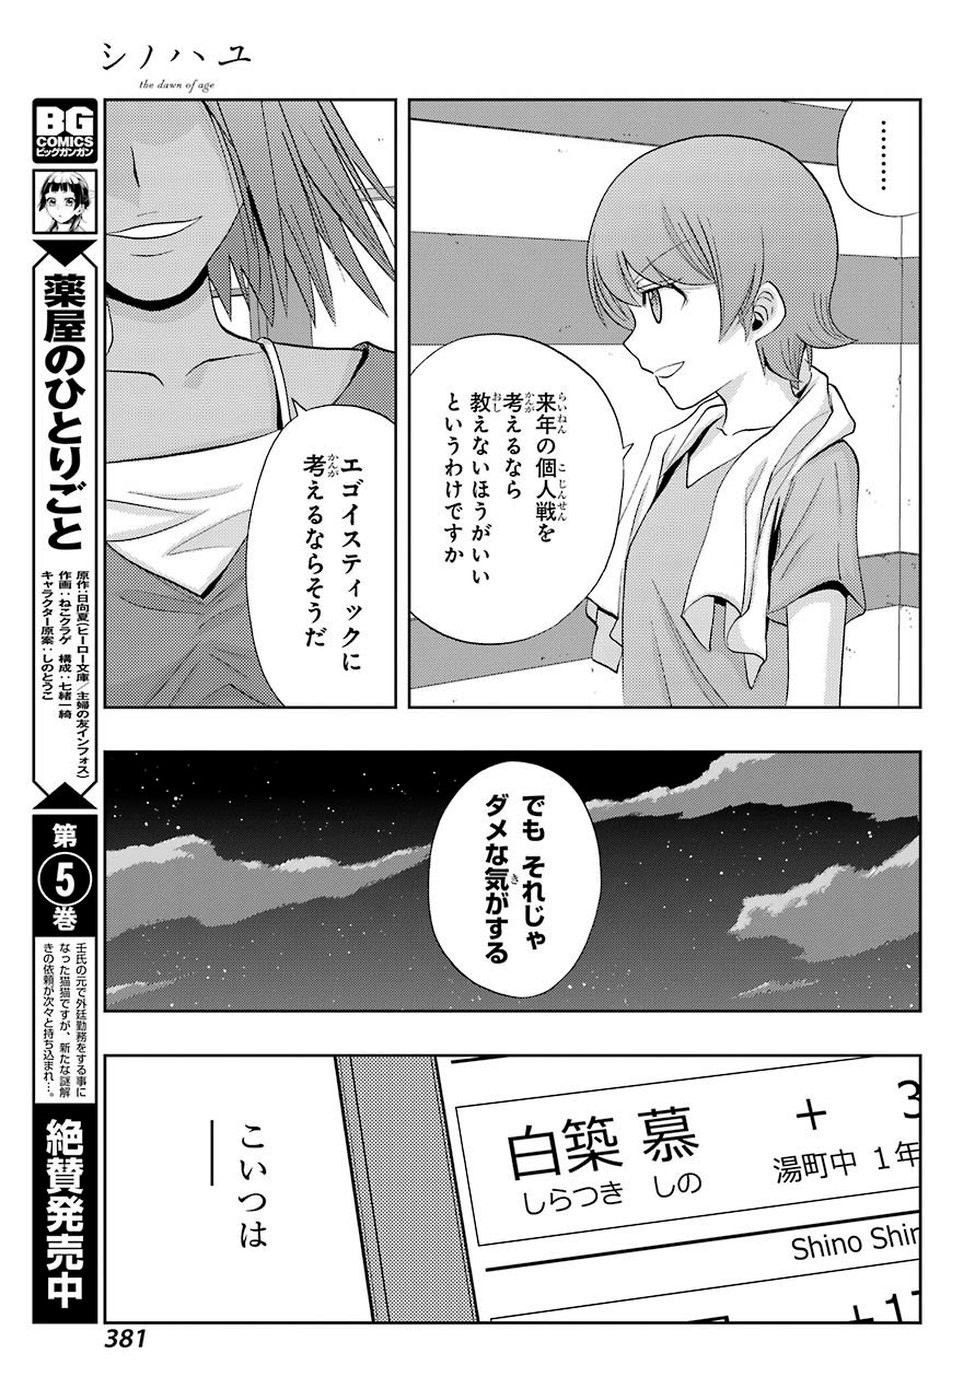 Shinohayu - The Dawn of Age Manga - Chapter 074 - Page 19